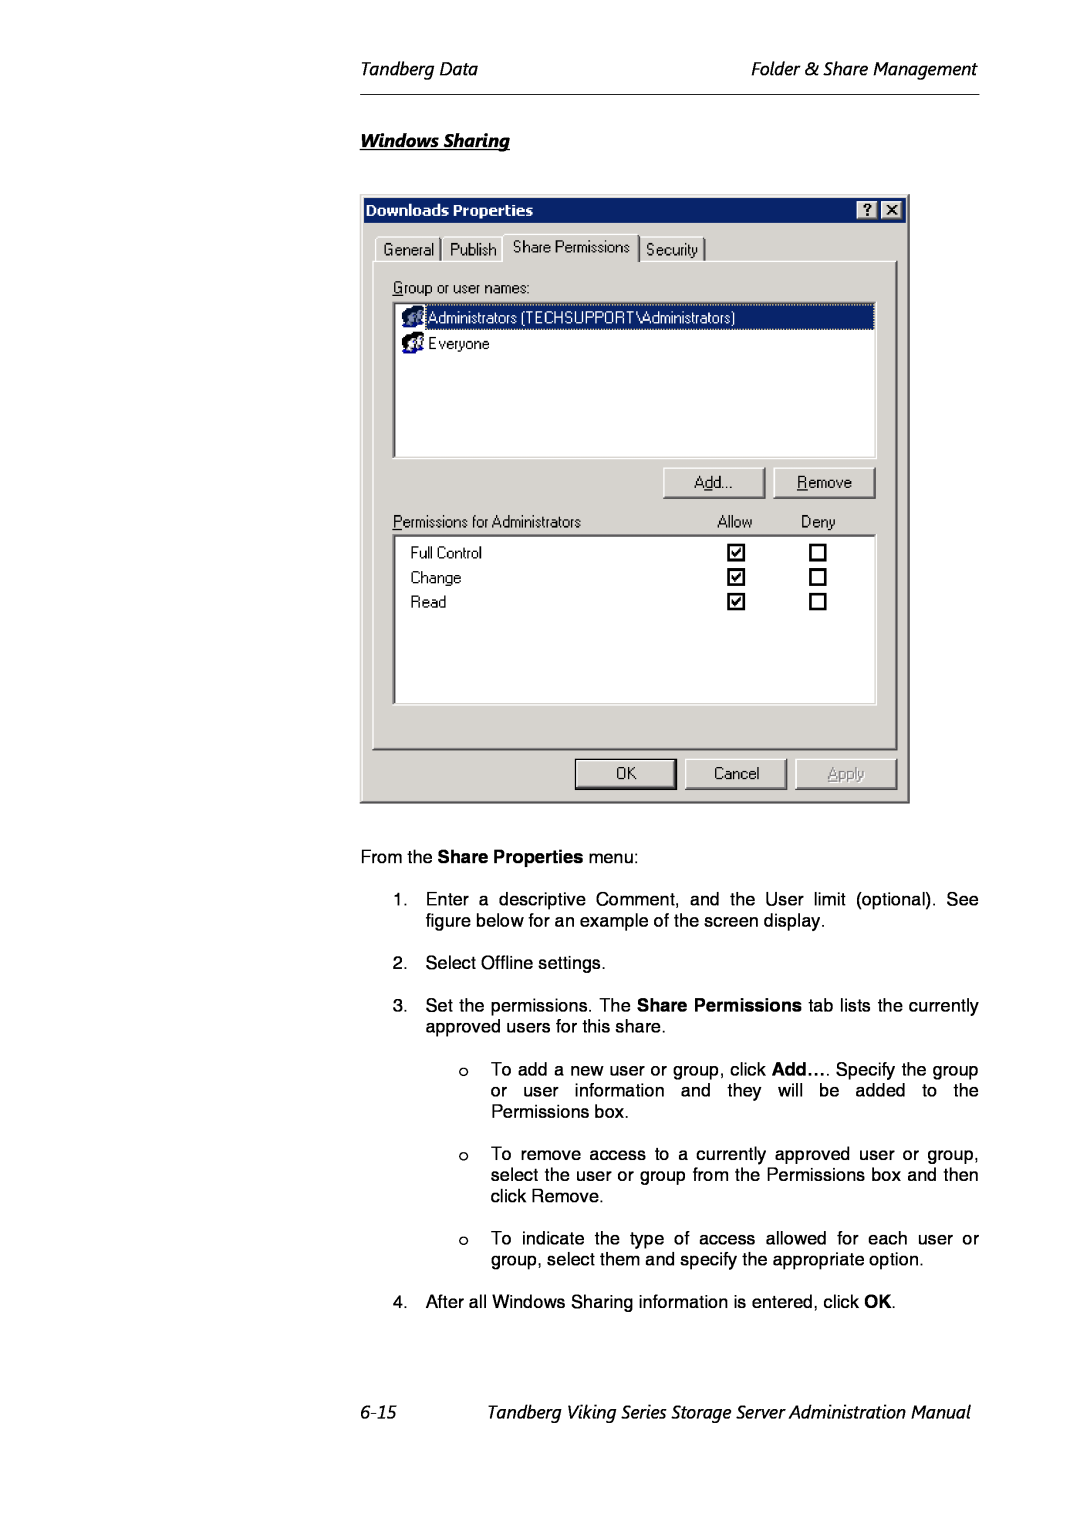 Tandberg Data Viking FS-1500 Windows Sharing, 6-15, Tandberg DataFolder & Share Management, From the Share Properties menu 